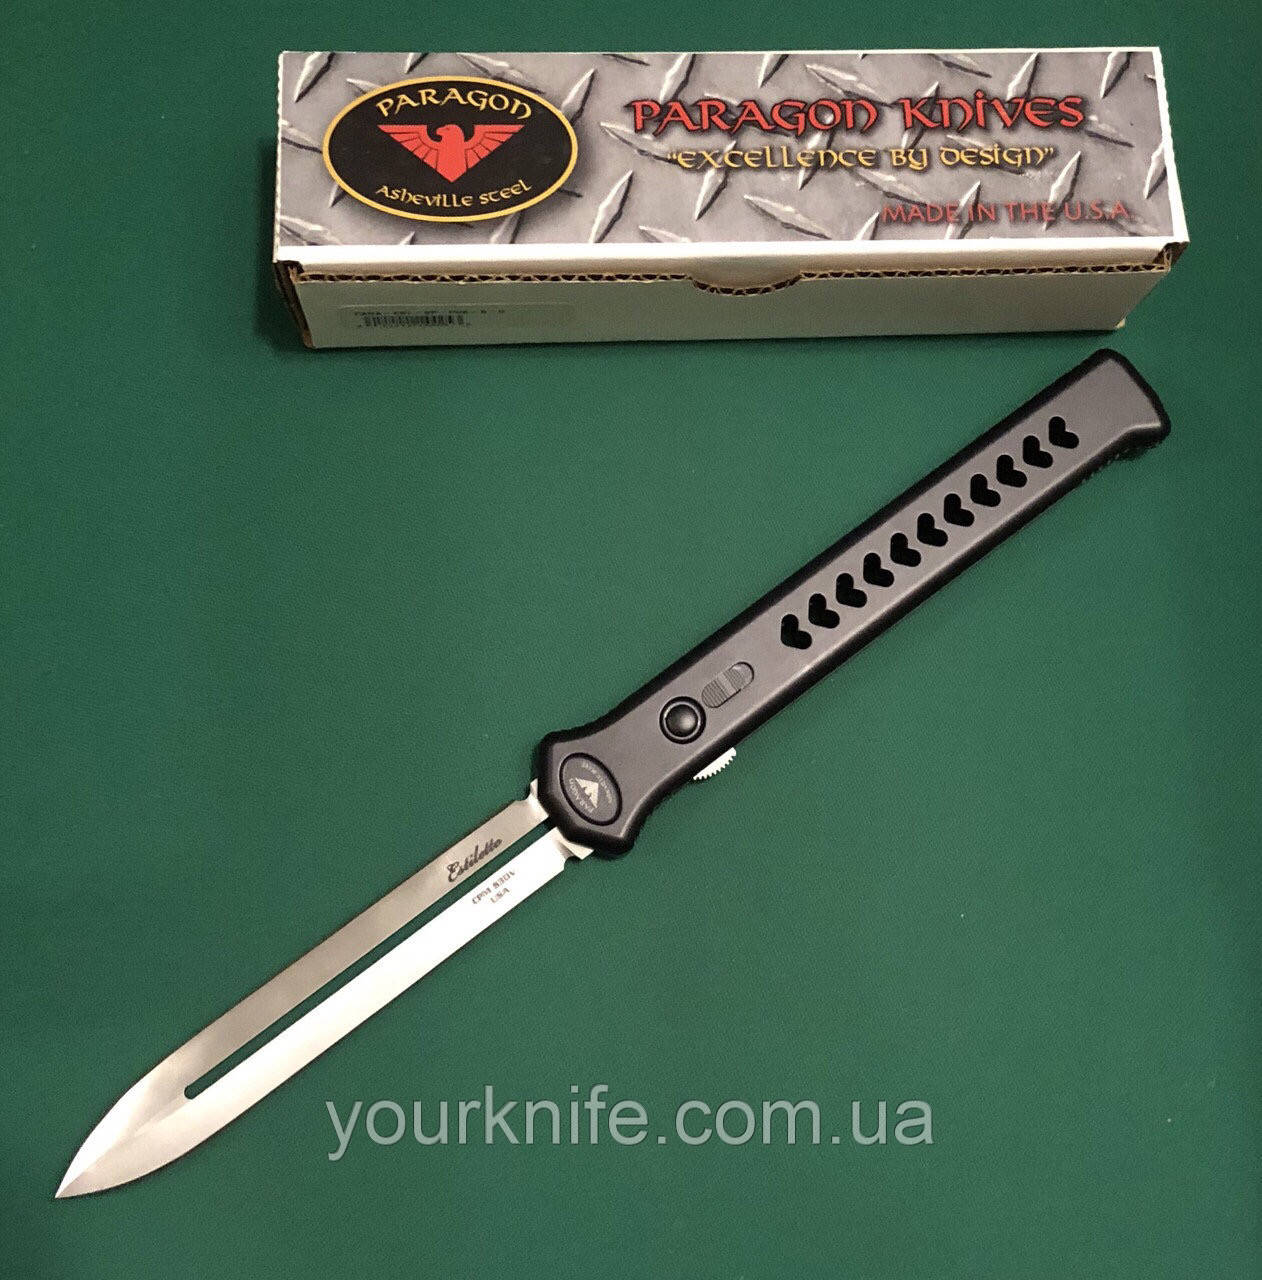 Купить Нож Paragon Estiletto Dagger black/Stonewash, цена 10348 грн -  Prom.ua (ID#30011732)